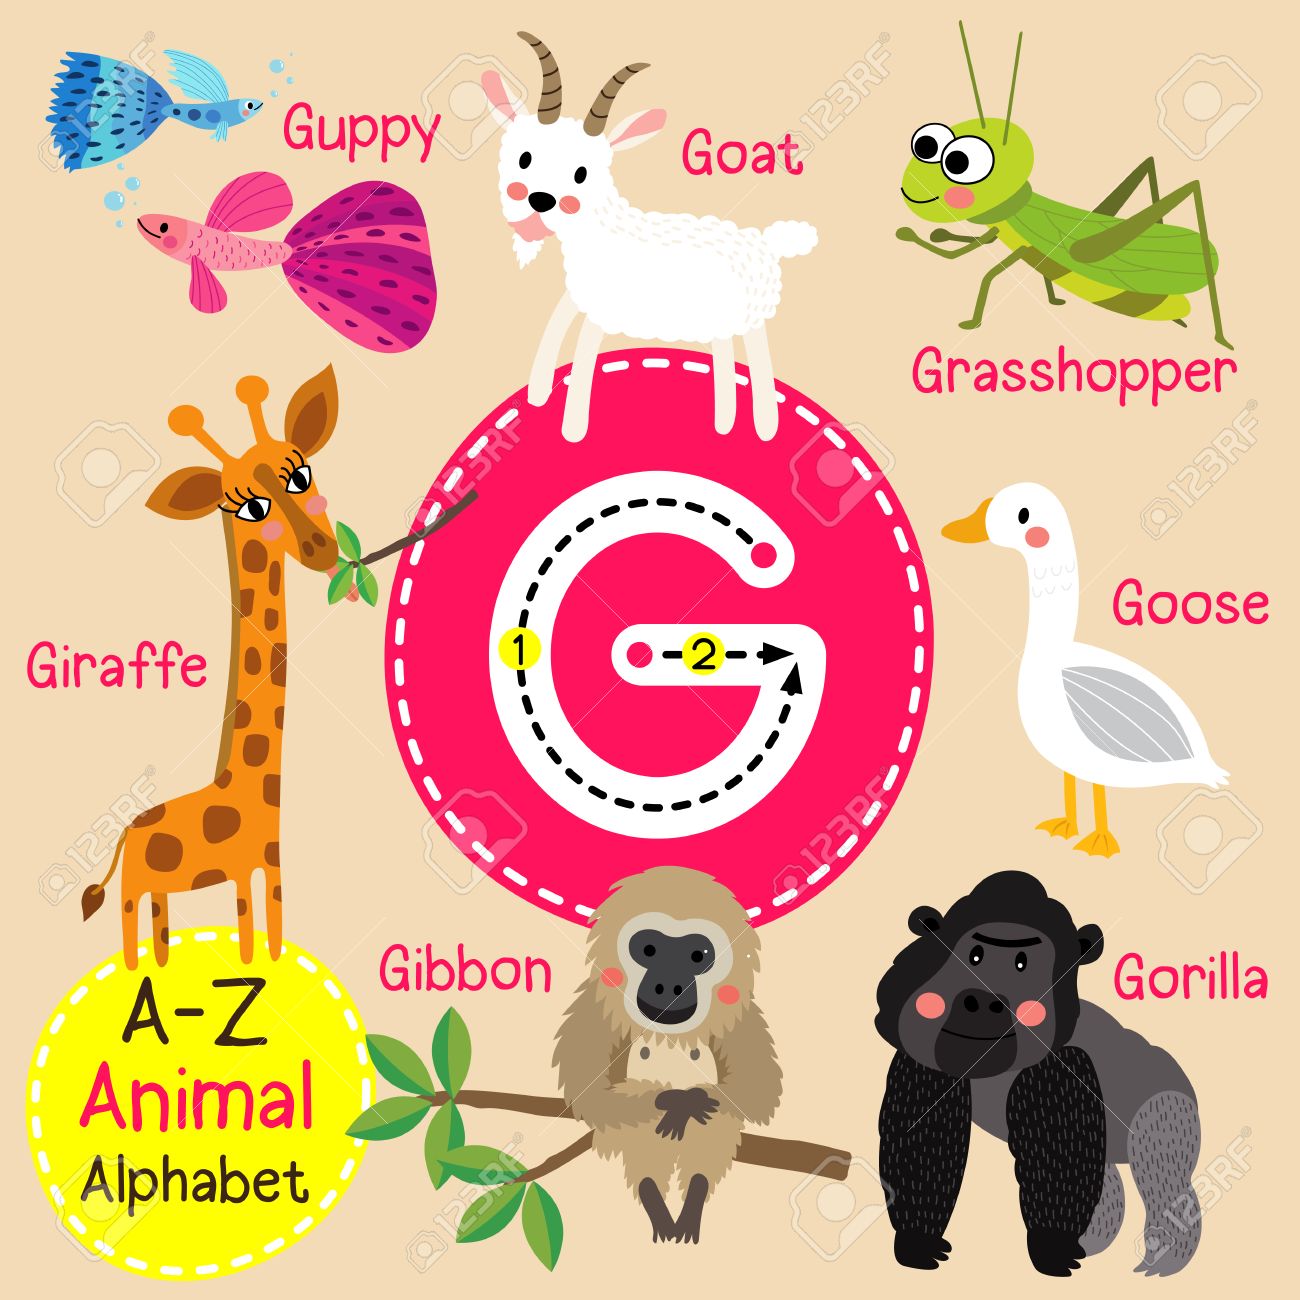 G letter tracing. Gibbon. Giraffe. Goat. Goose. Gorilla. Guppy.